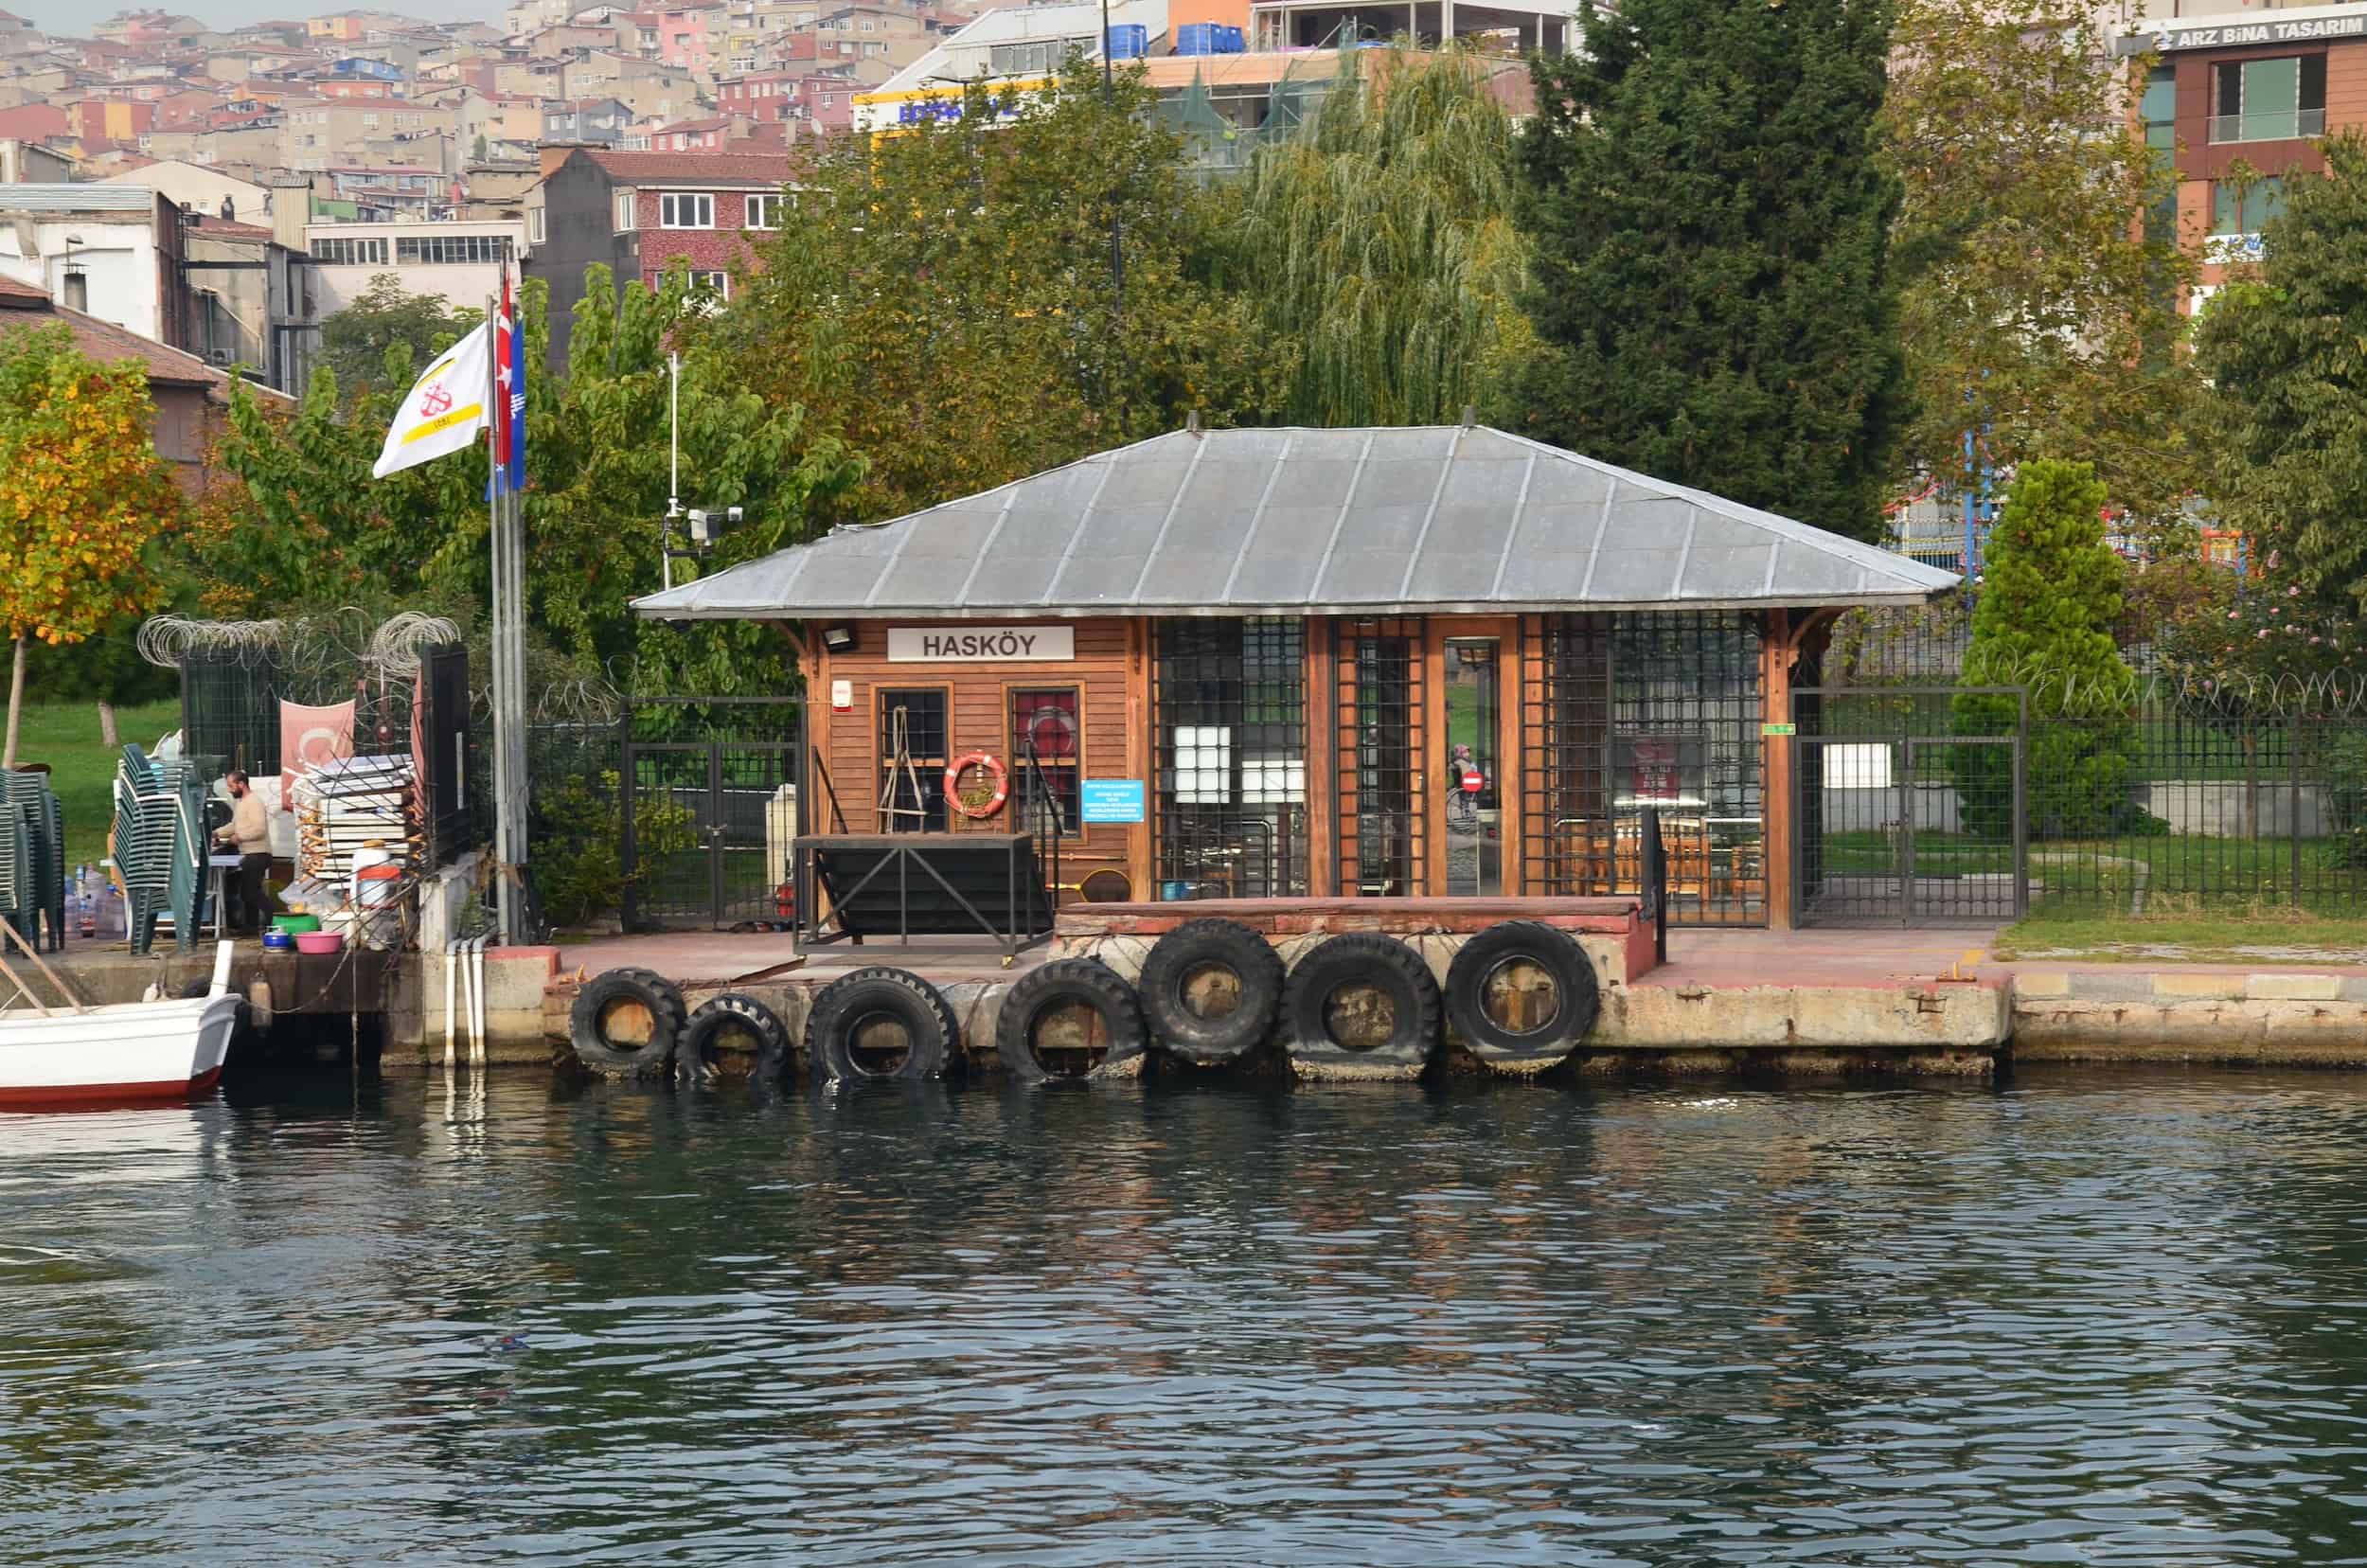 Ferry terminal in Hasköy, Istanbul, Turkey